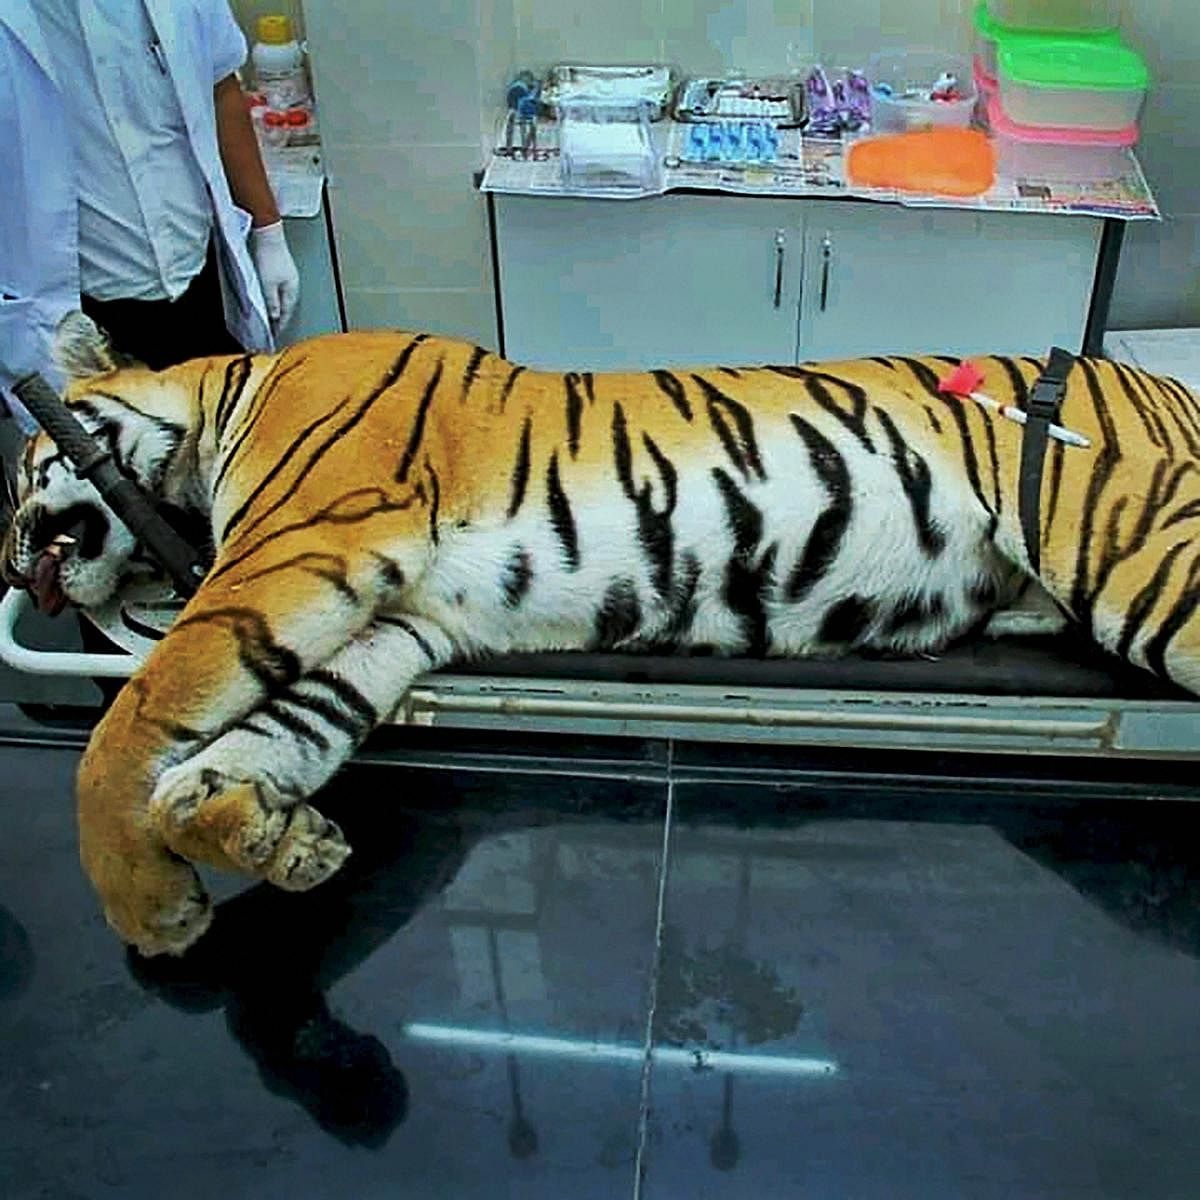 Avni killing: Central India’s tiger landscape stressed